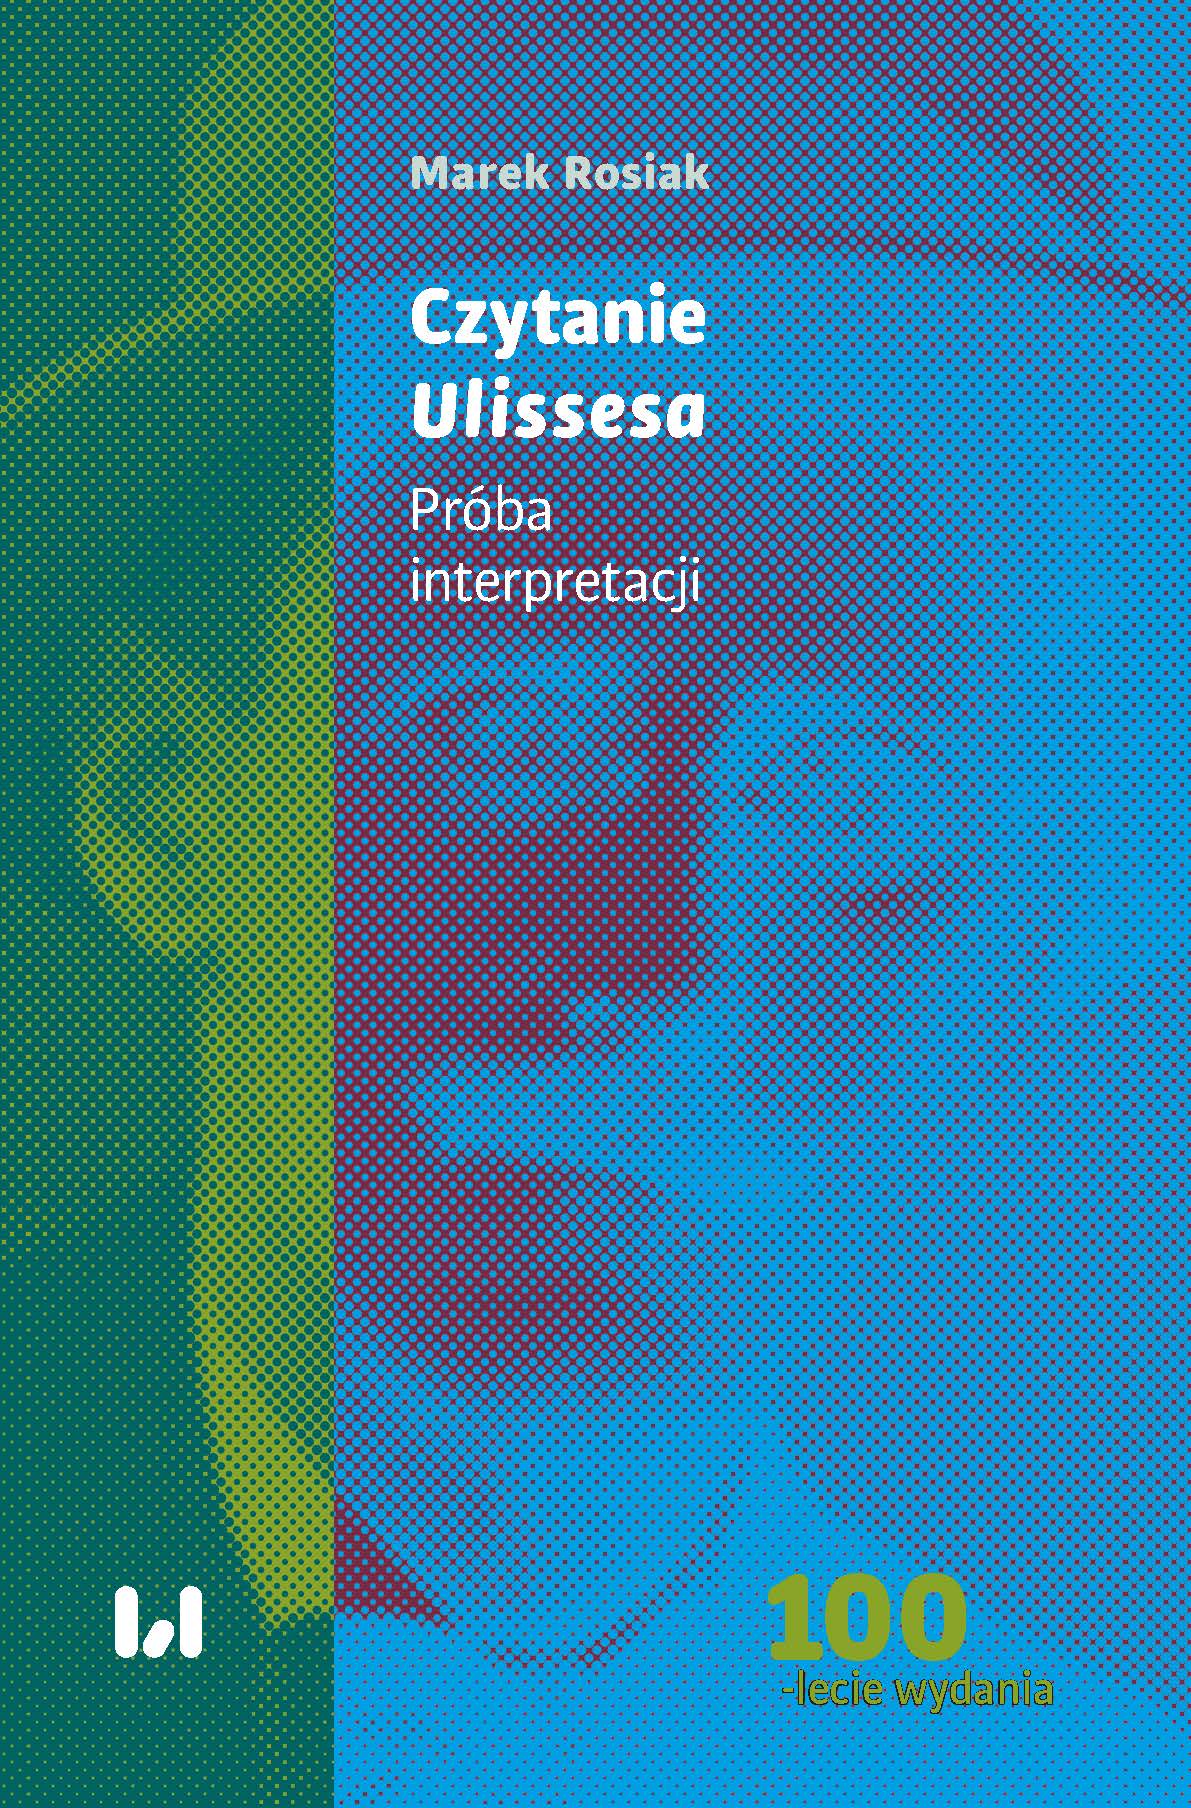 Reading „Ulysses". An attempt at interpretation Cover Image